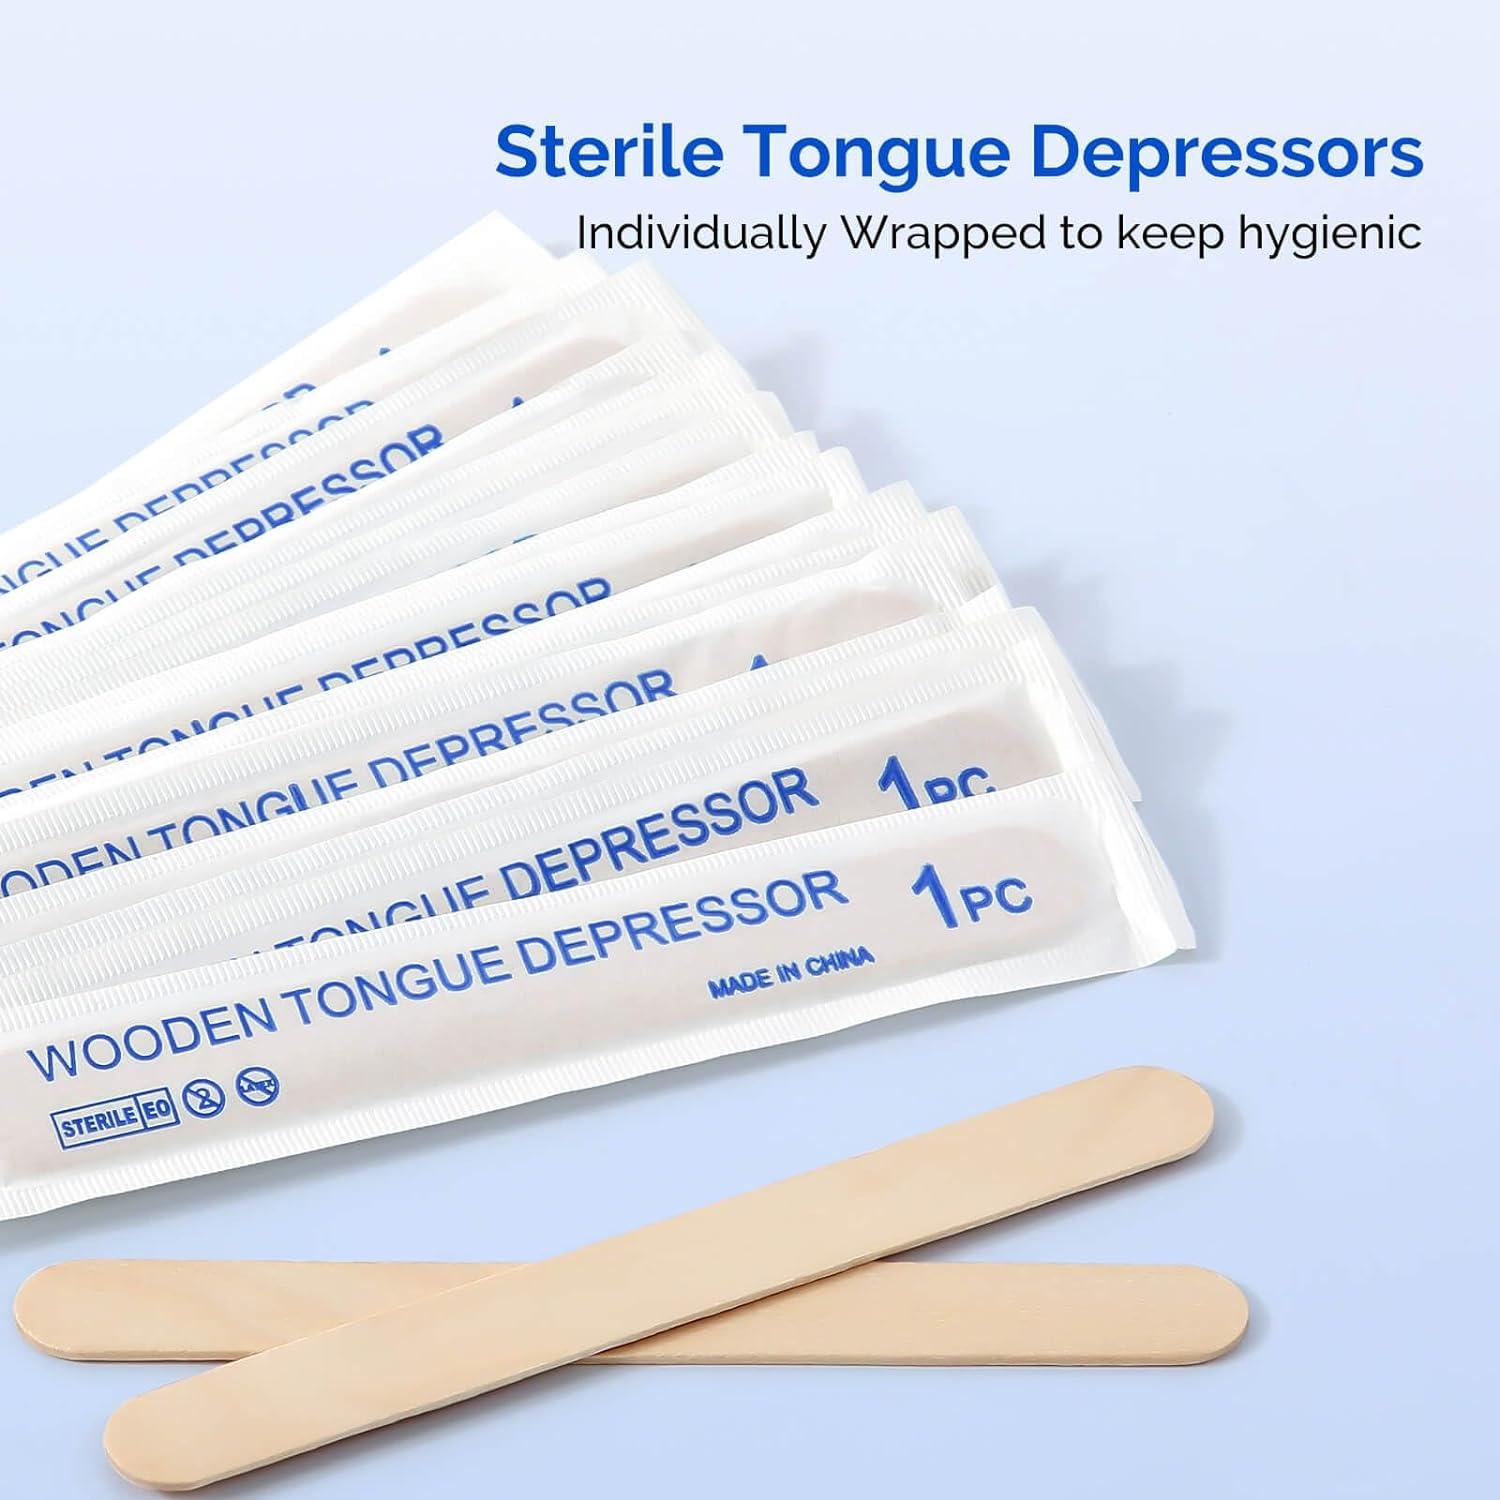 WOOD TONGUE DEPRESSORS - not sterile